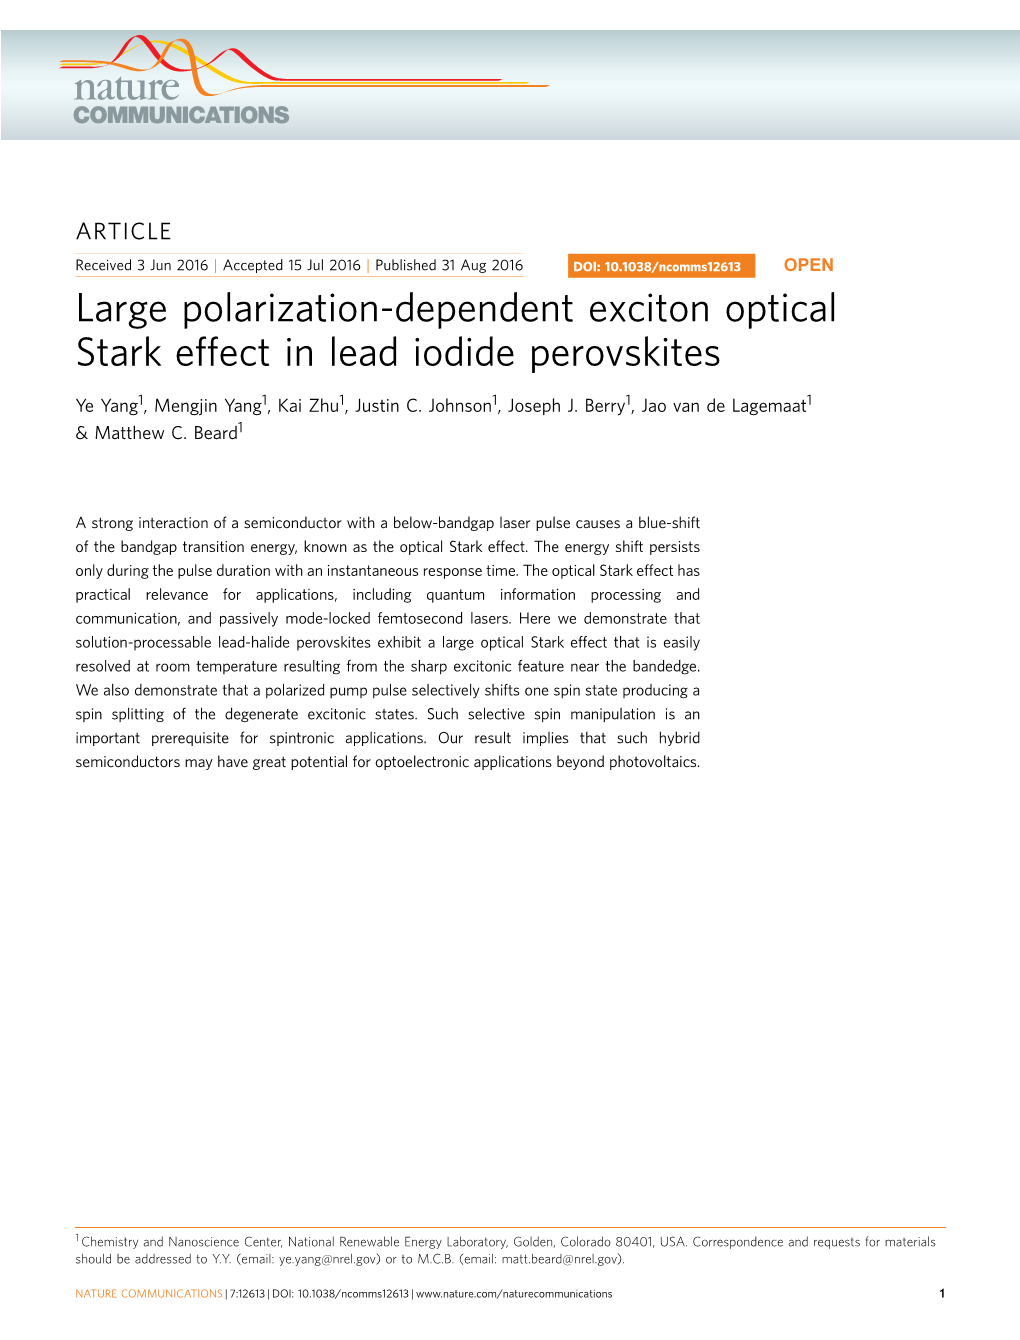 Large Polarization-Dependent Exciton Optical Stark Effect in Lead Iodide Perovskites